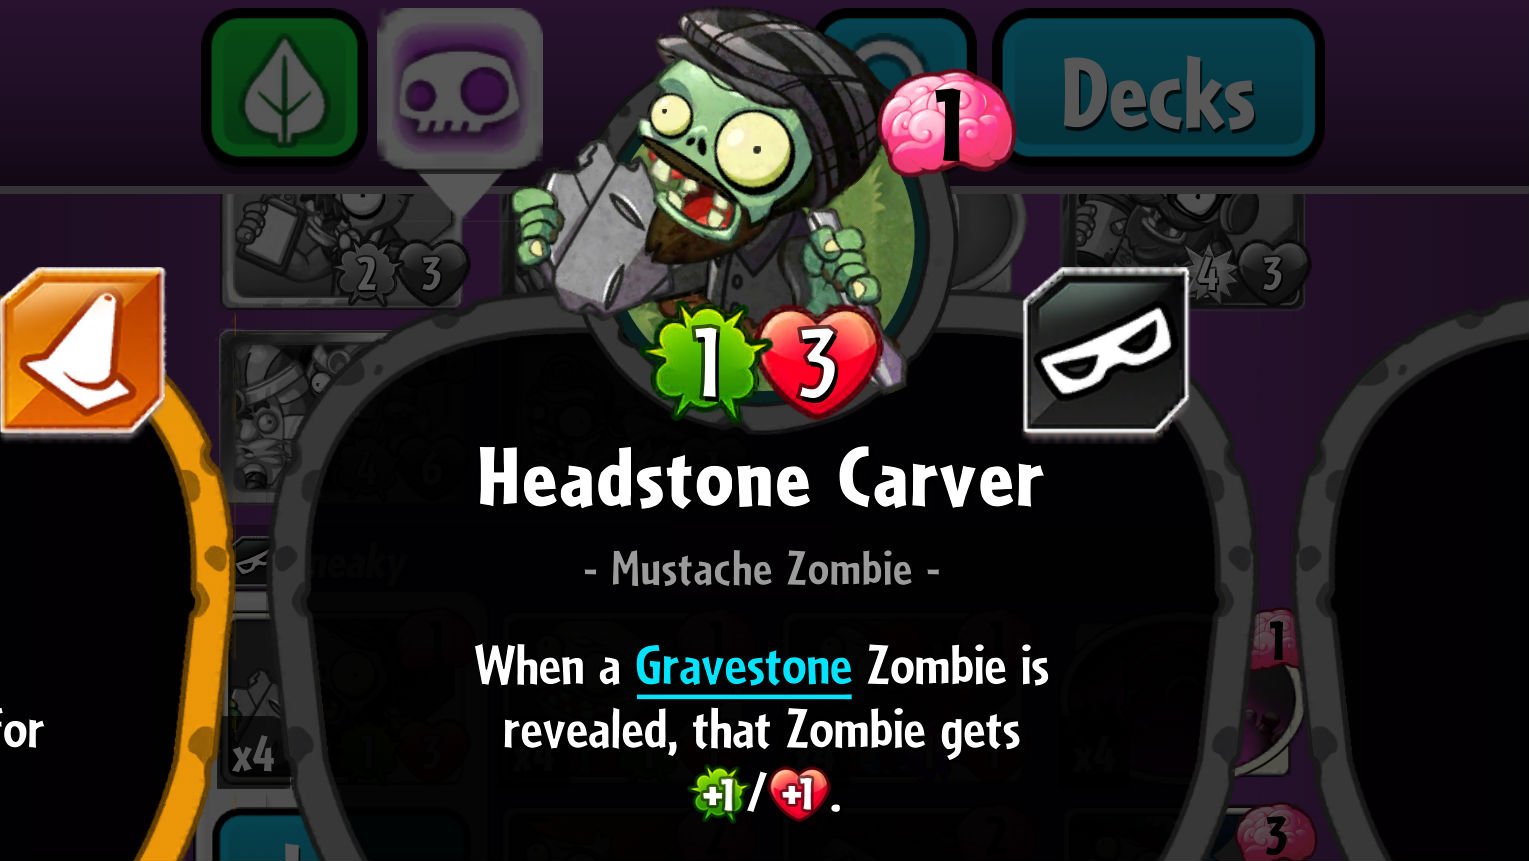 Plants vs. Zombies Heroes Headstone Carver